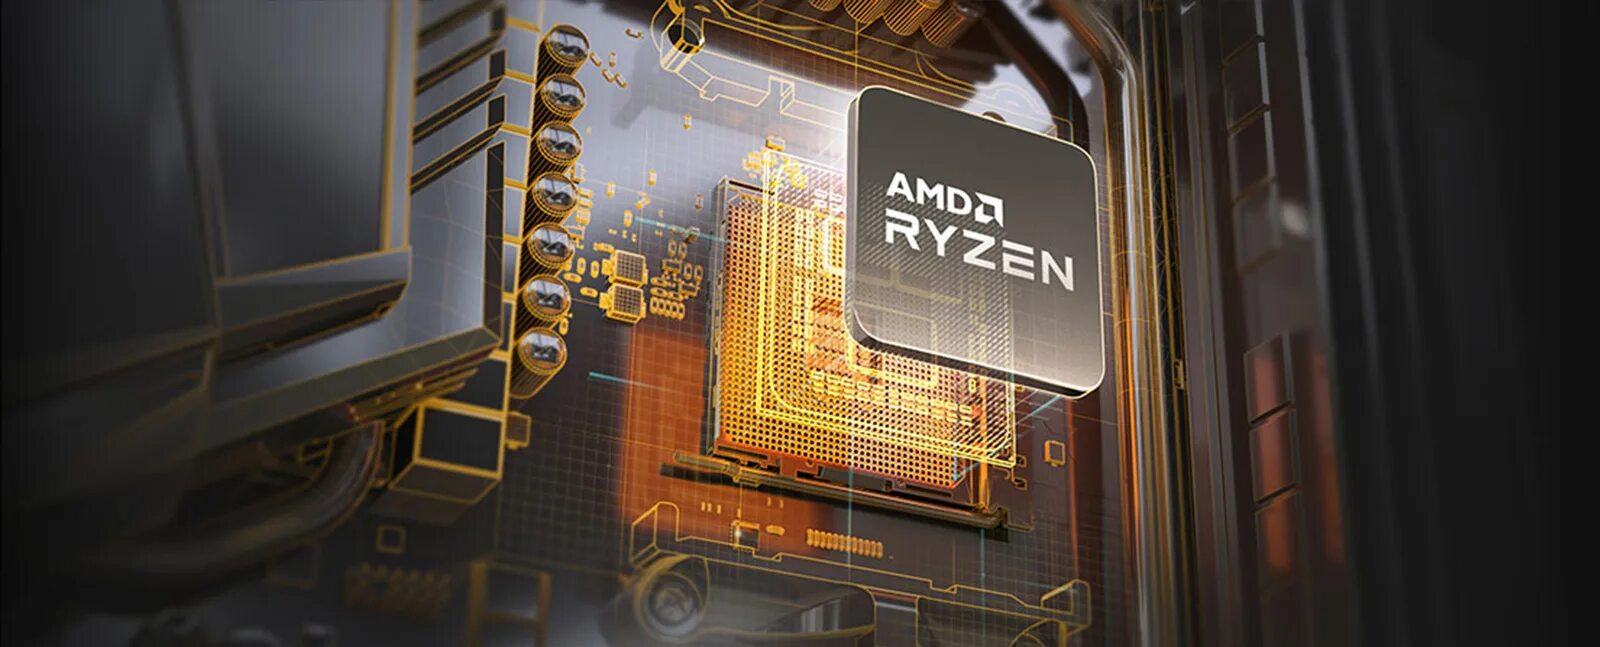 Ryzen 5 5000. Ryzen 5 4600g Кристалл. AMD Ryzen 7 5800x. AMD Ryzen 7 5800x3d am4, 8 x 3400 МГЦ. Amd ryzen 5 series